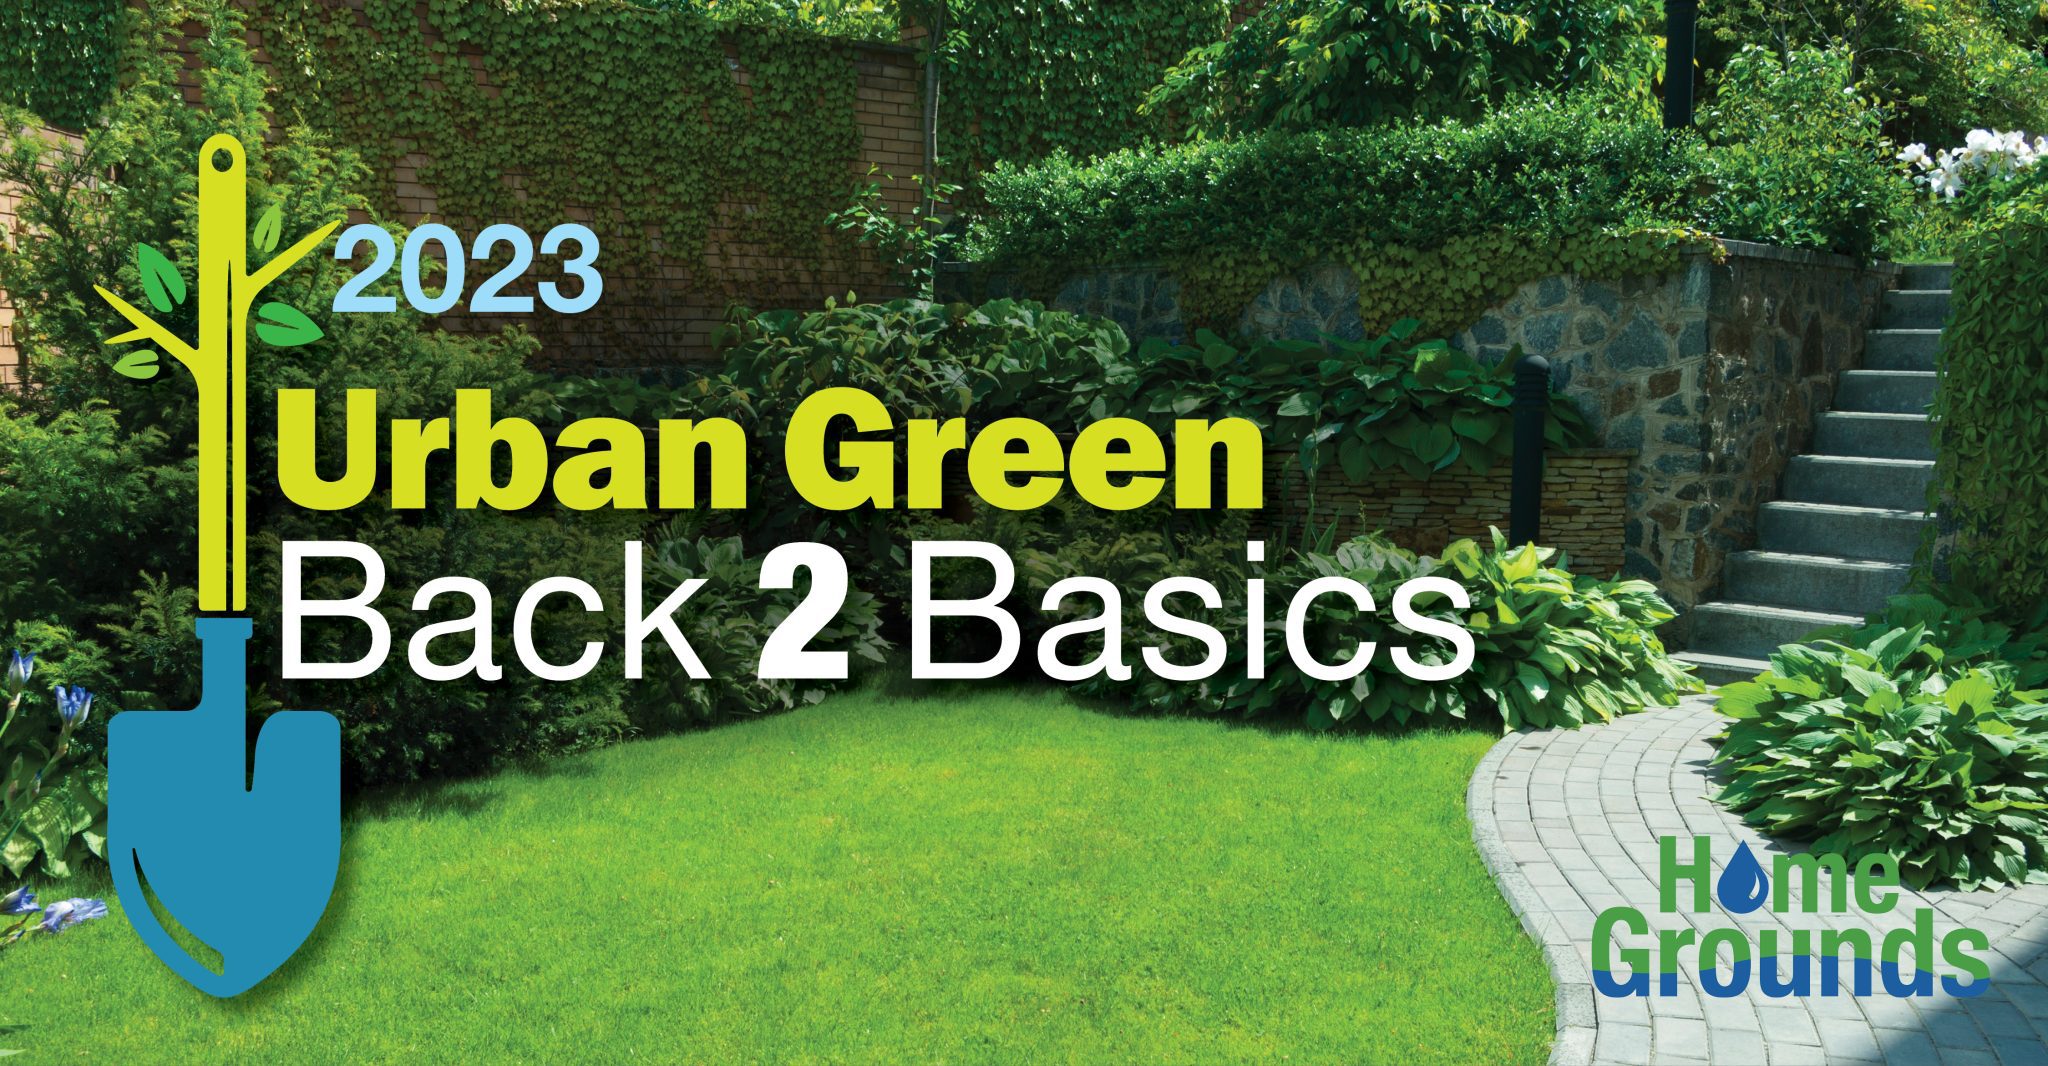 2023 Urban Green Back 2 Basics